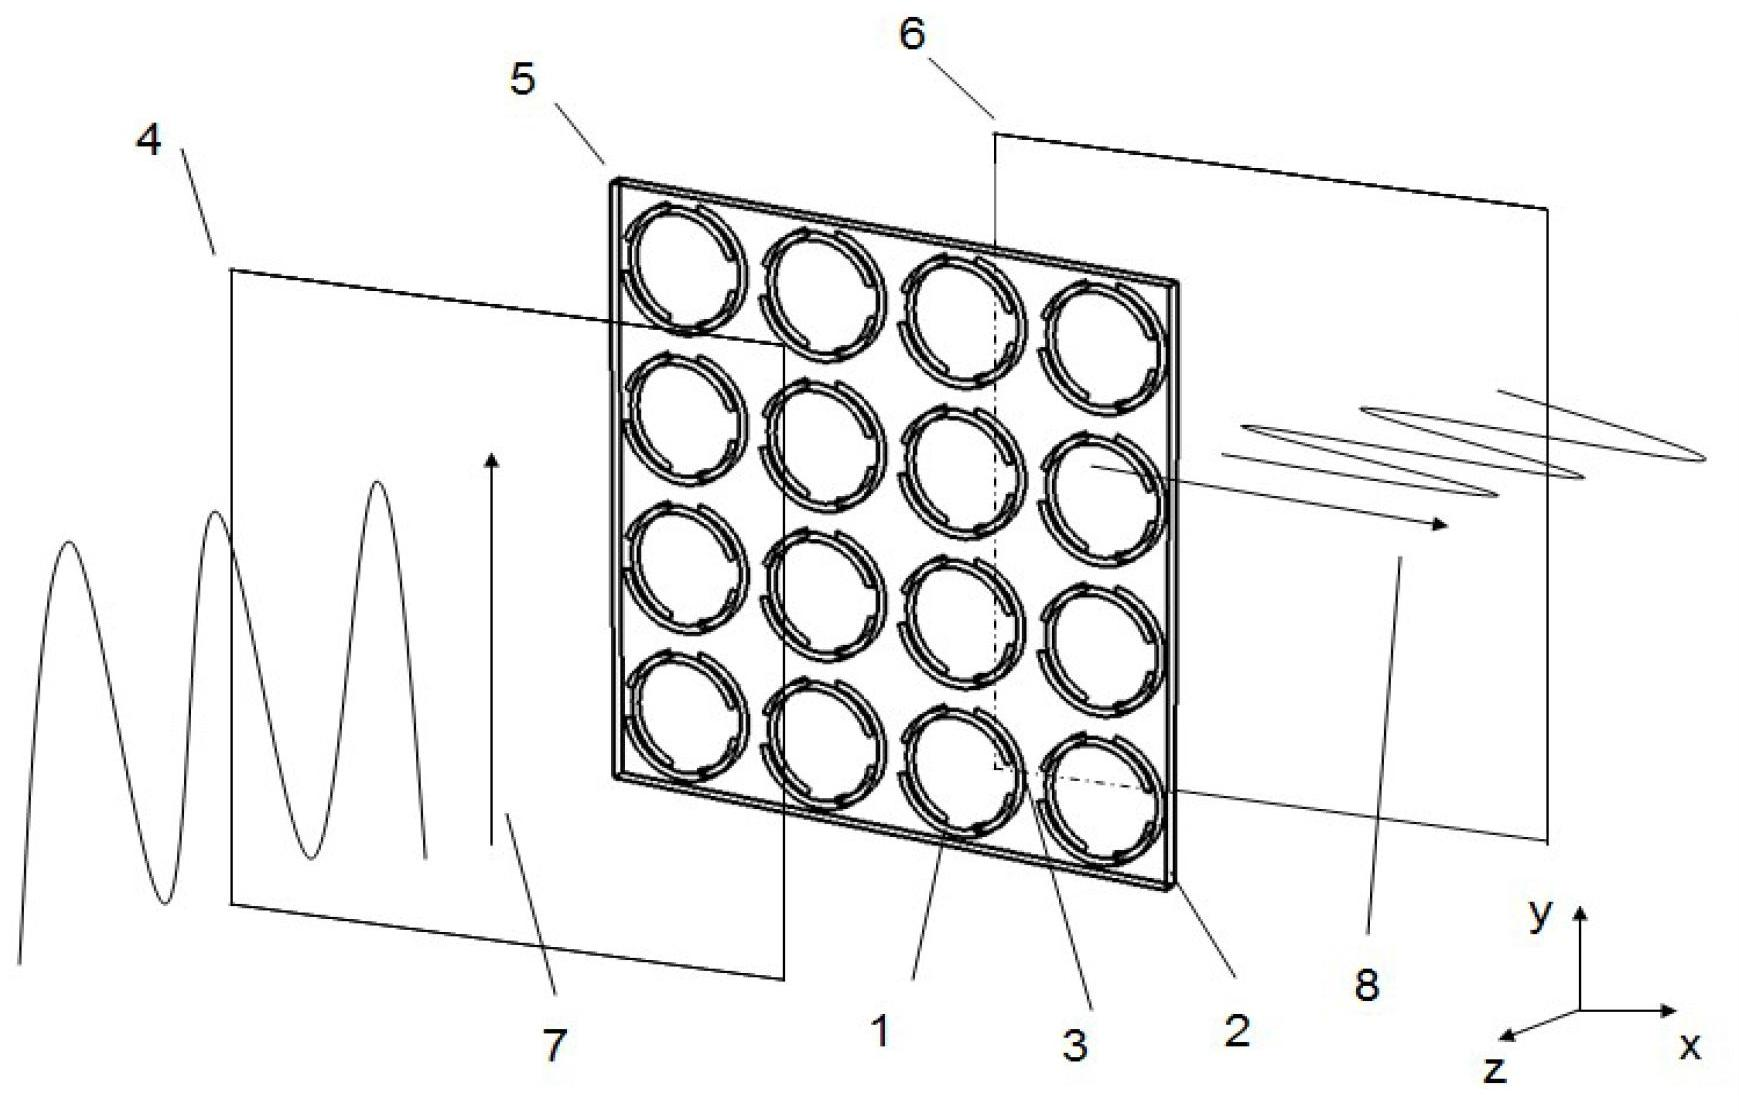 Multimodal cross polarization filter based on metamaterials